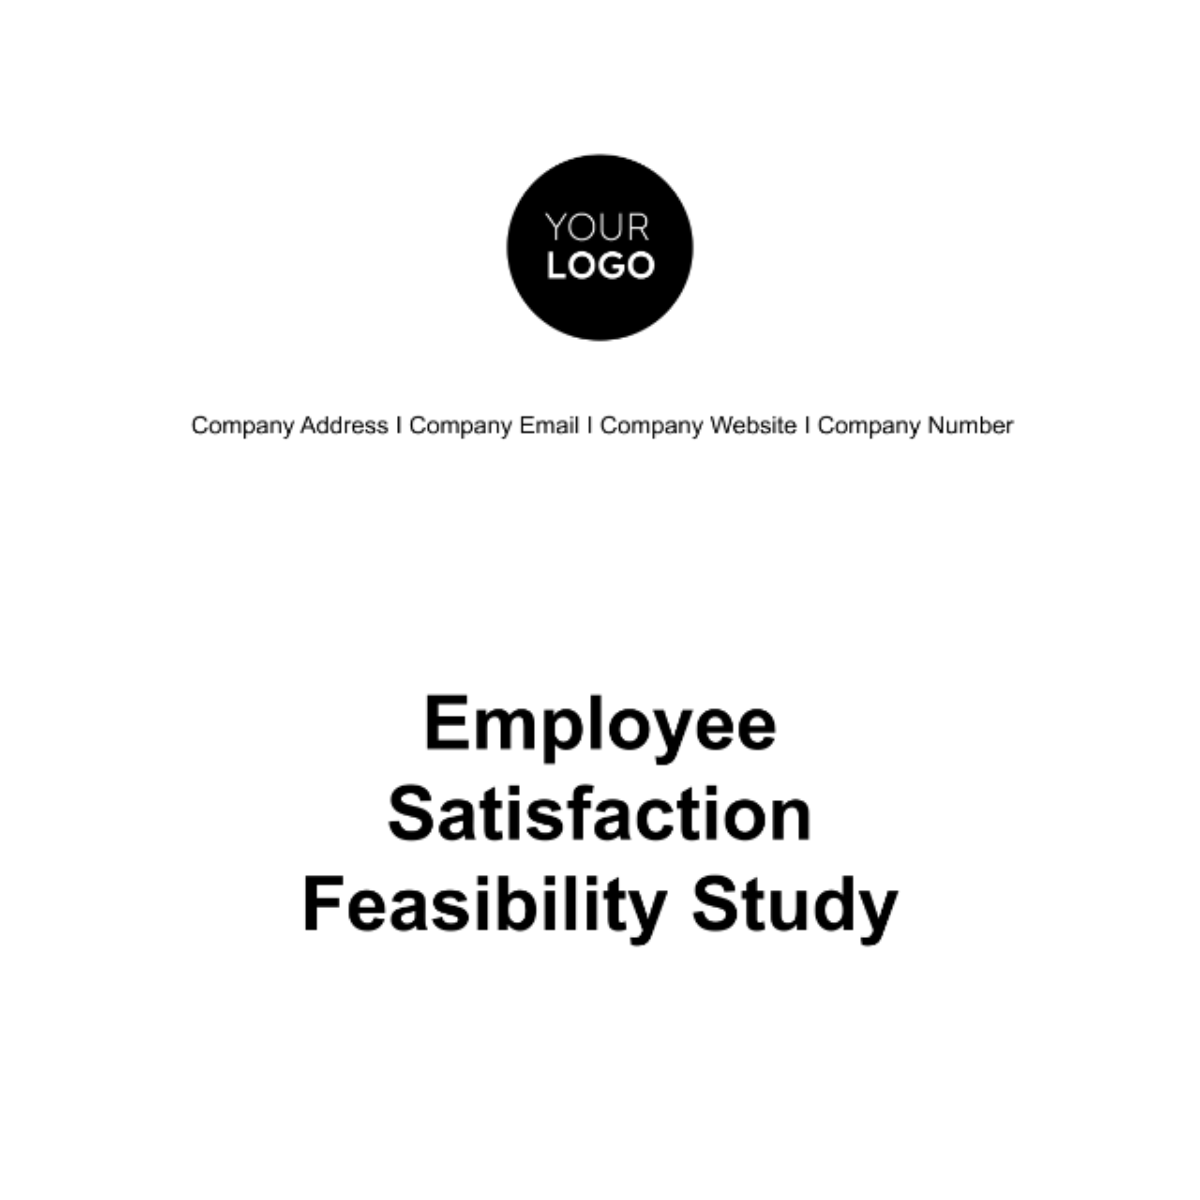 Employee Satisfaction Feasibility Study HR Template